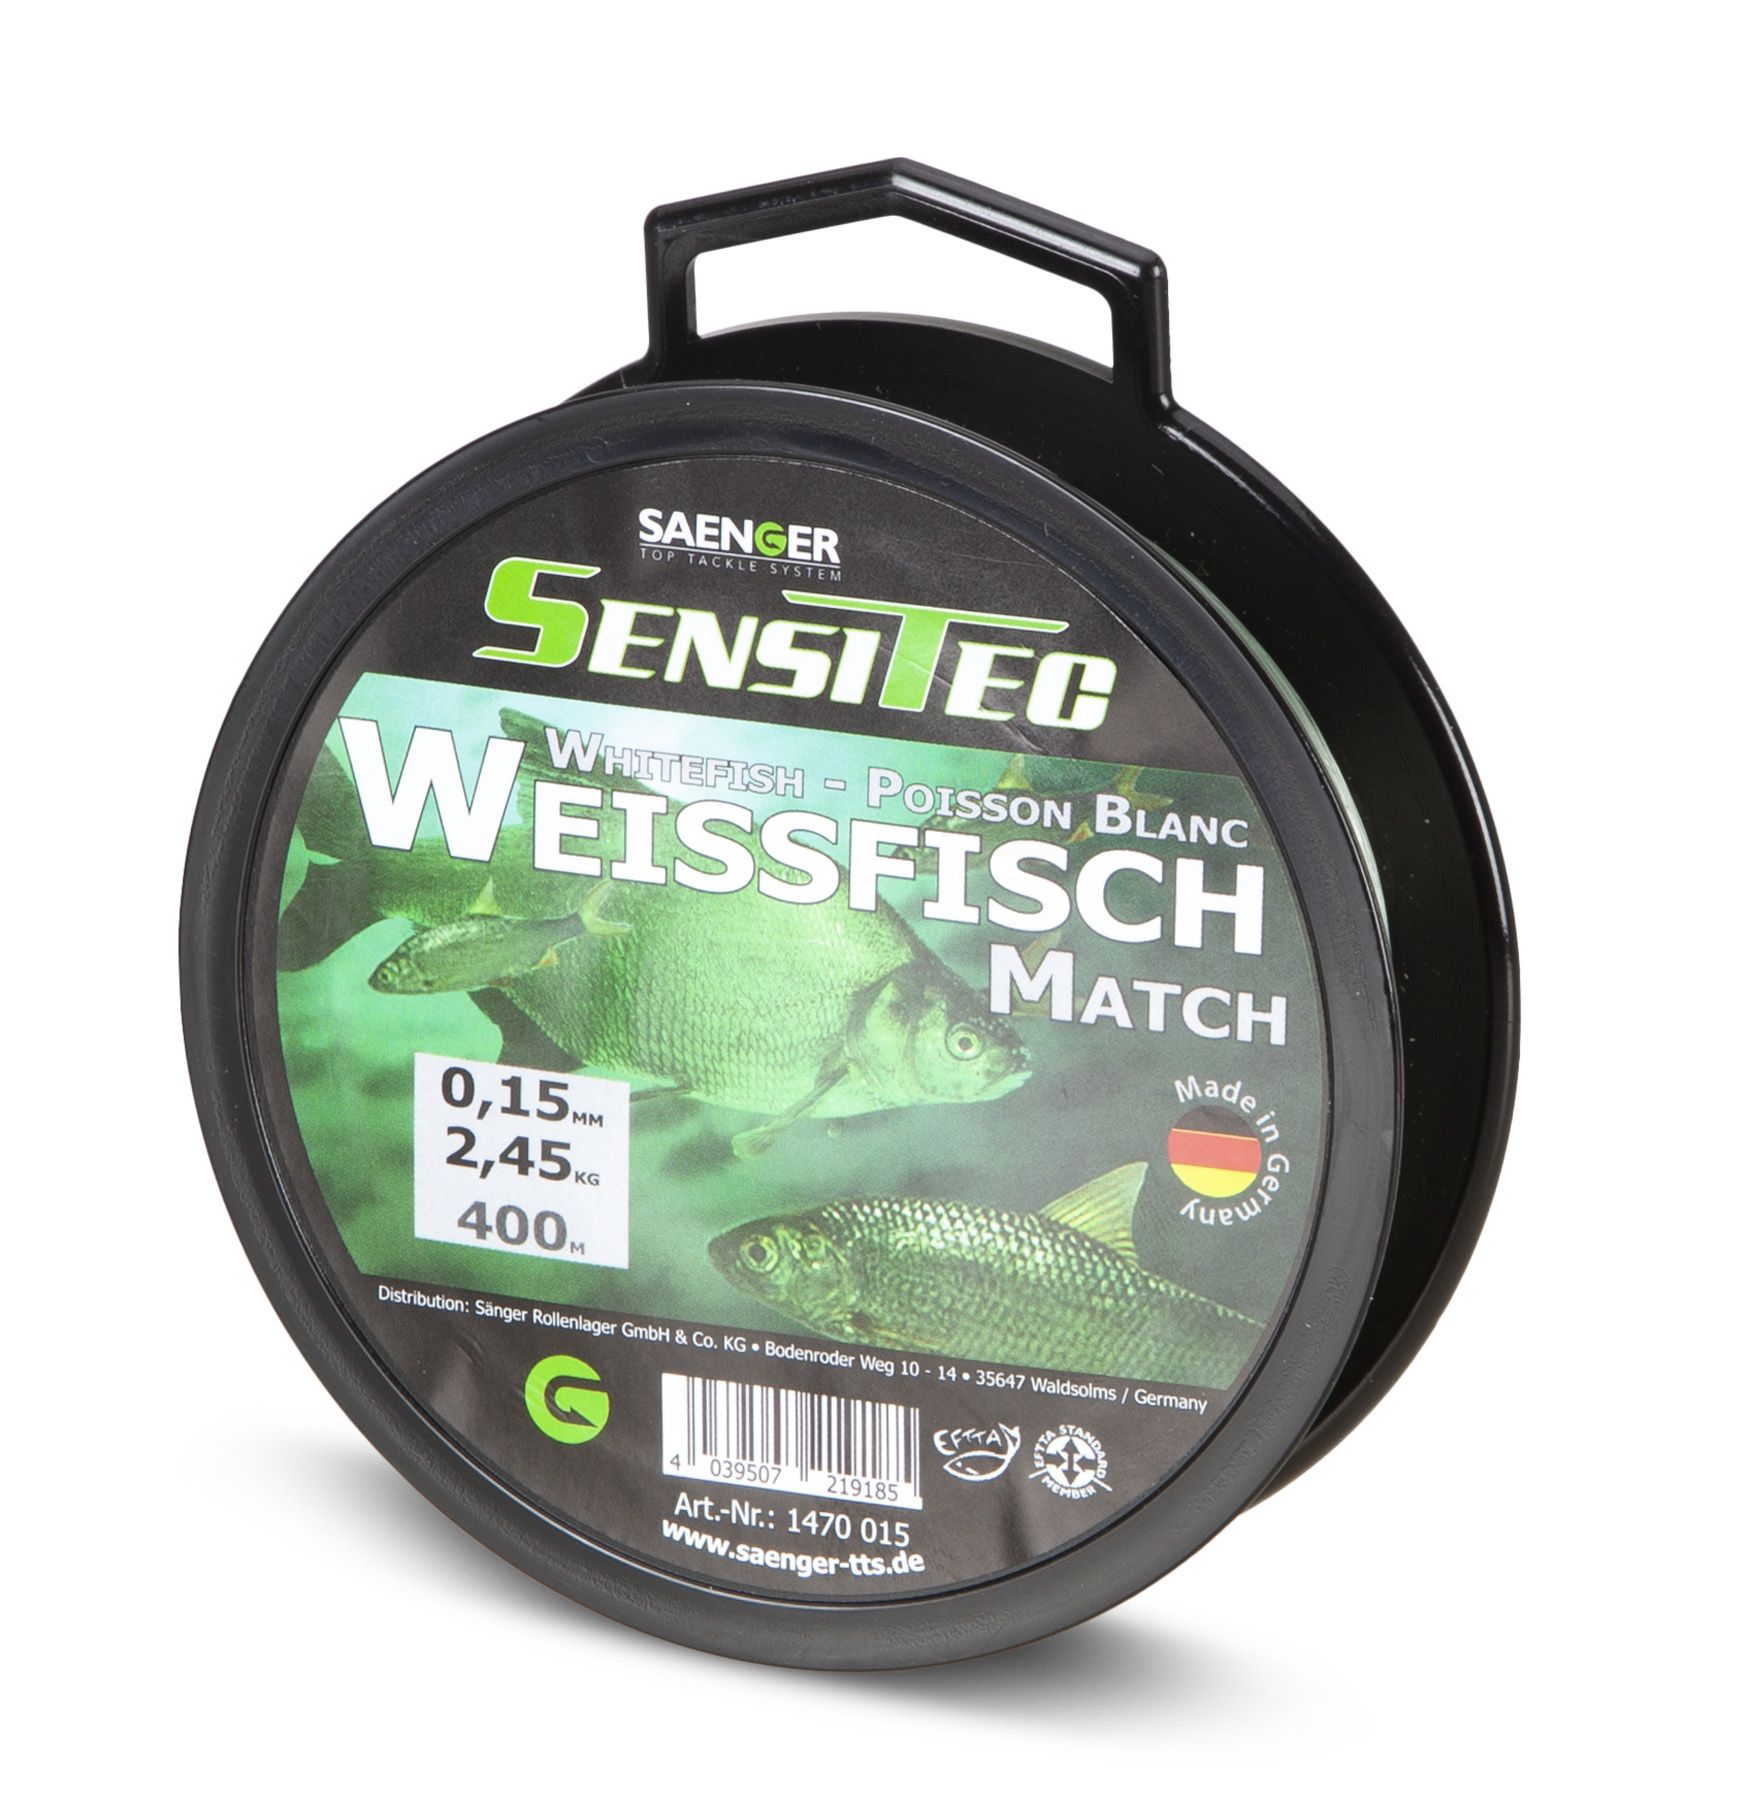 Sensitec Match za bijelu ribu - limpid green 400m 0,20 mm